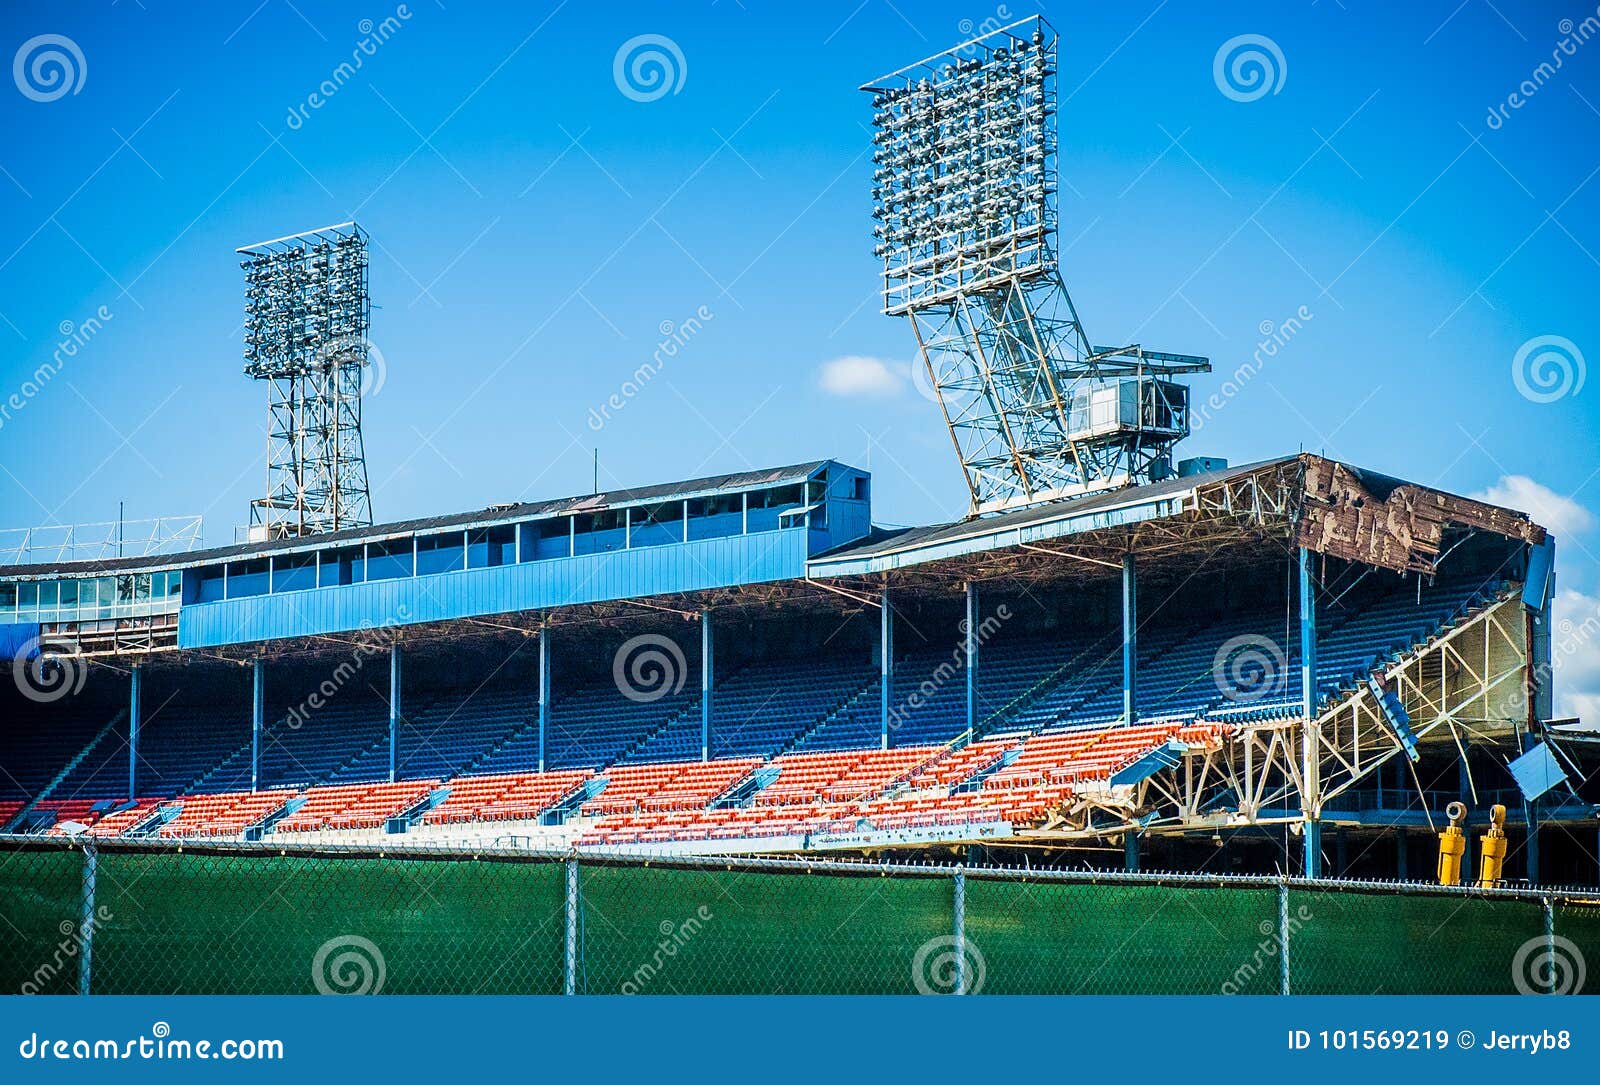 Detroits Old Tiger Stadium Demolition Stock Image - Image of